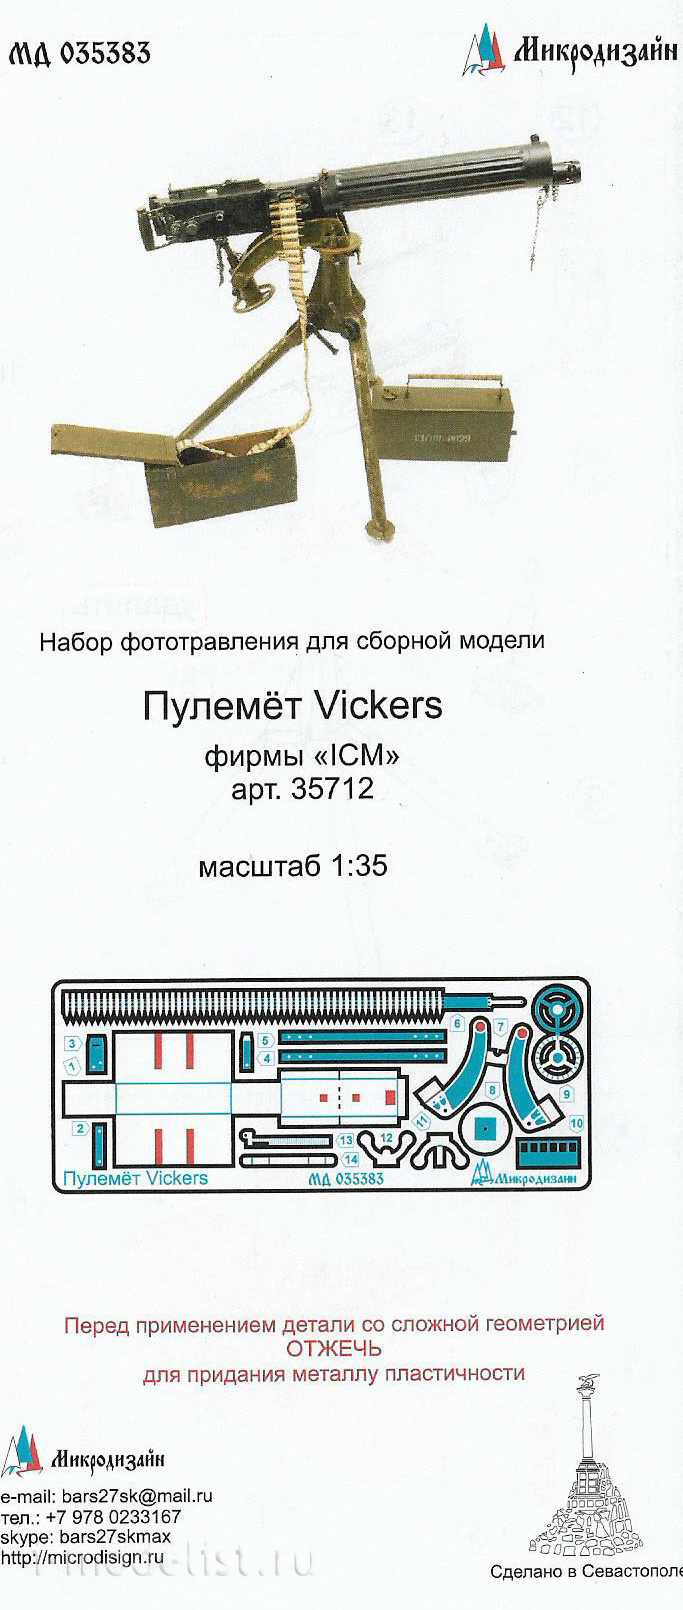 035383 microdesign 1/35 photo etching kit for Vickers Machine gun